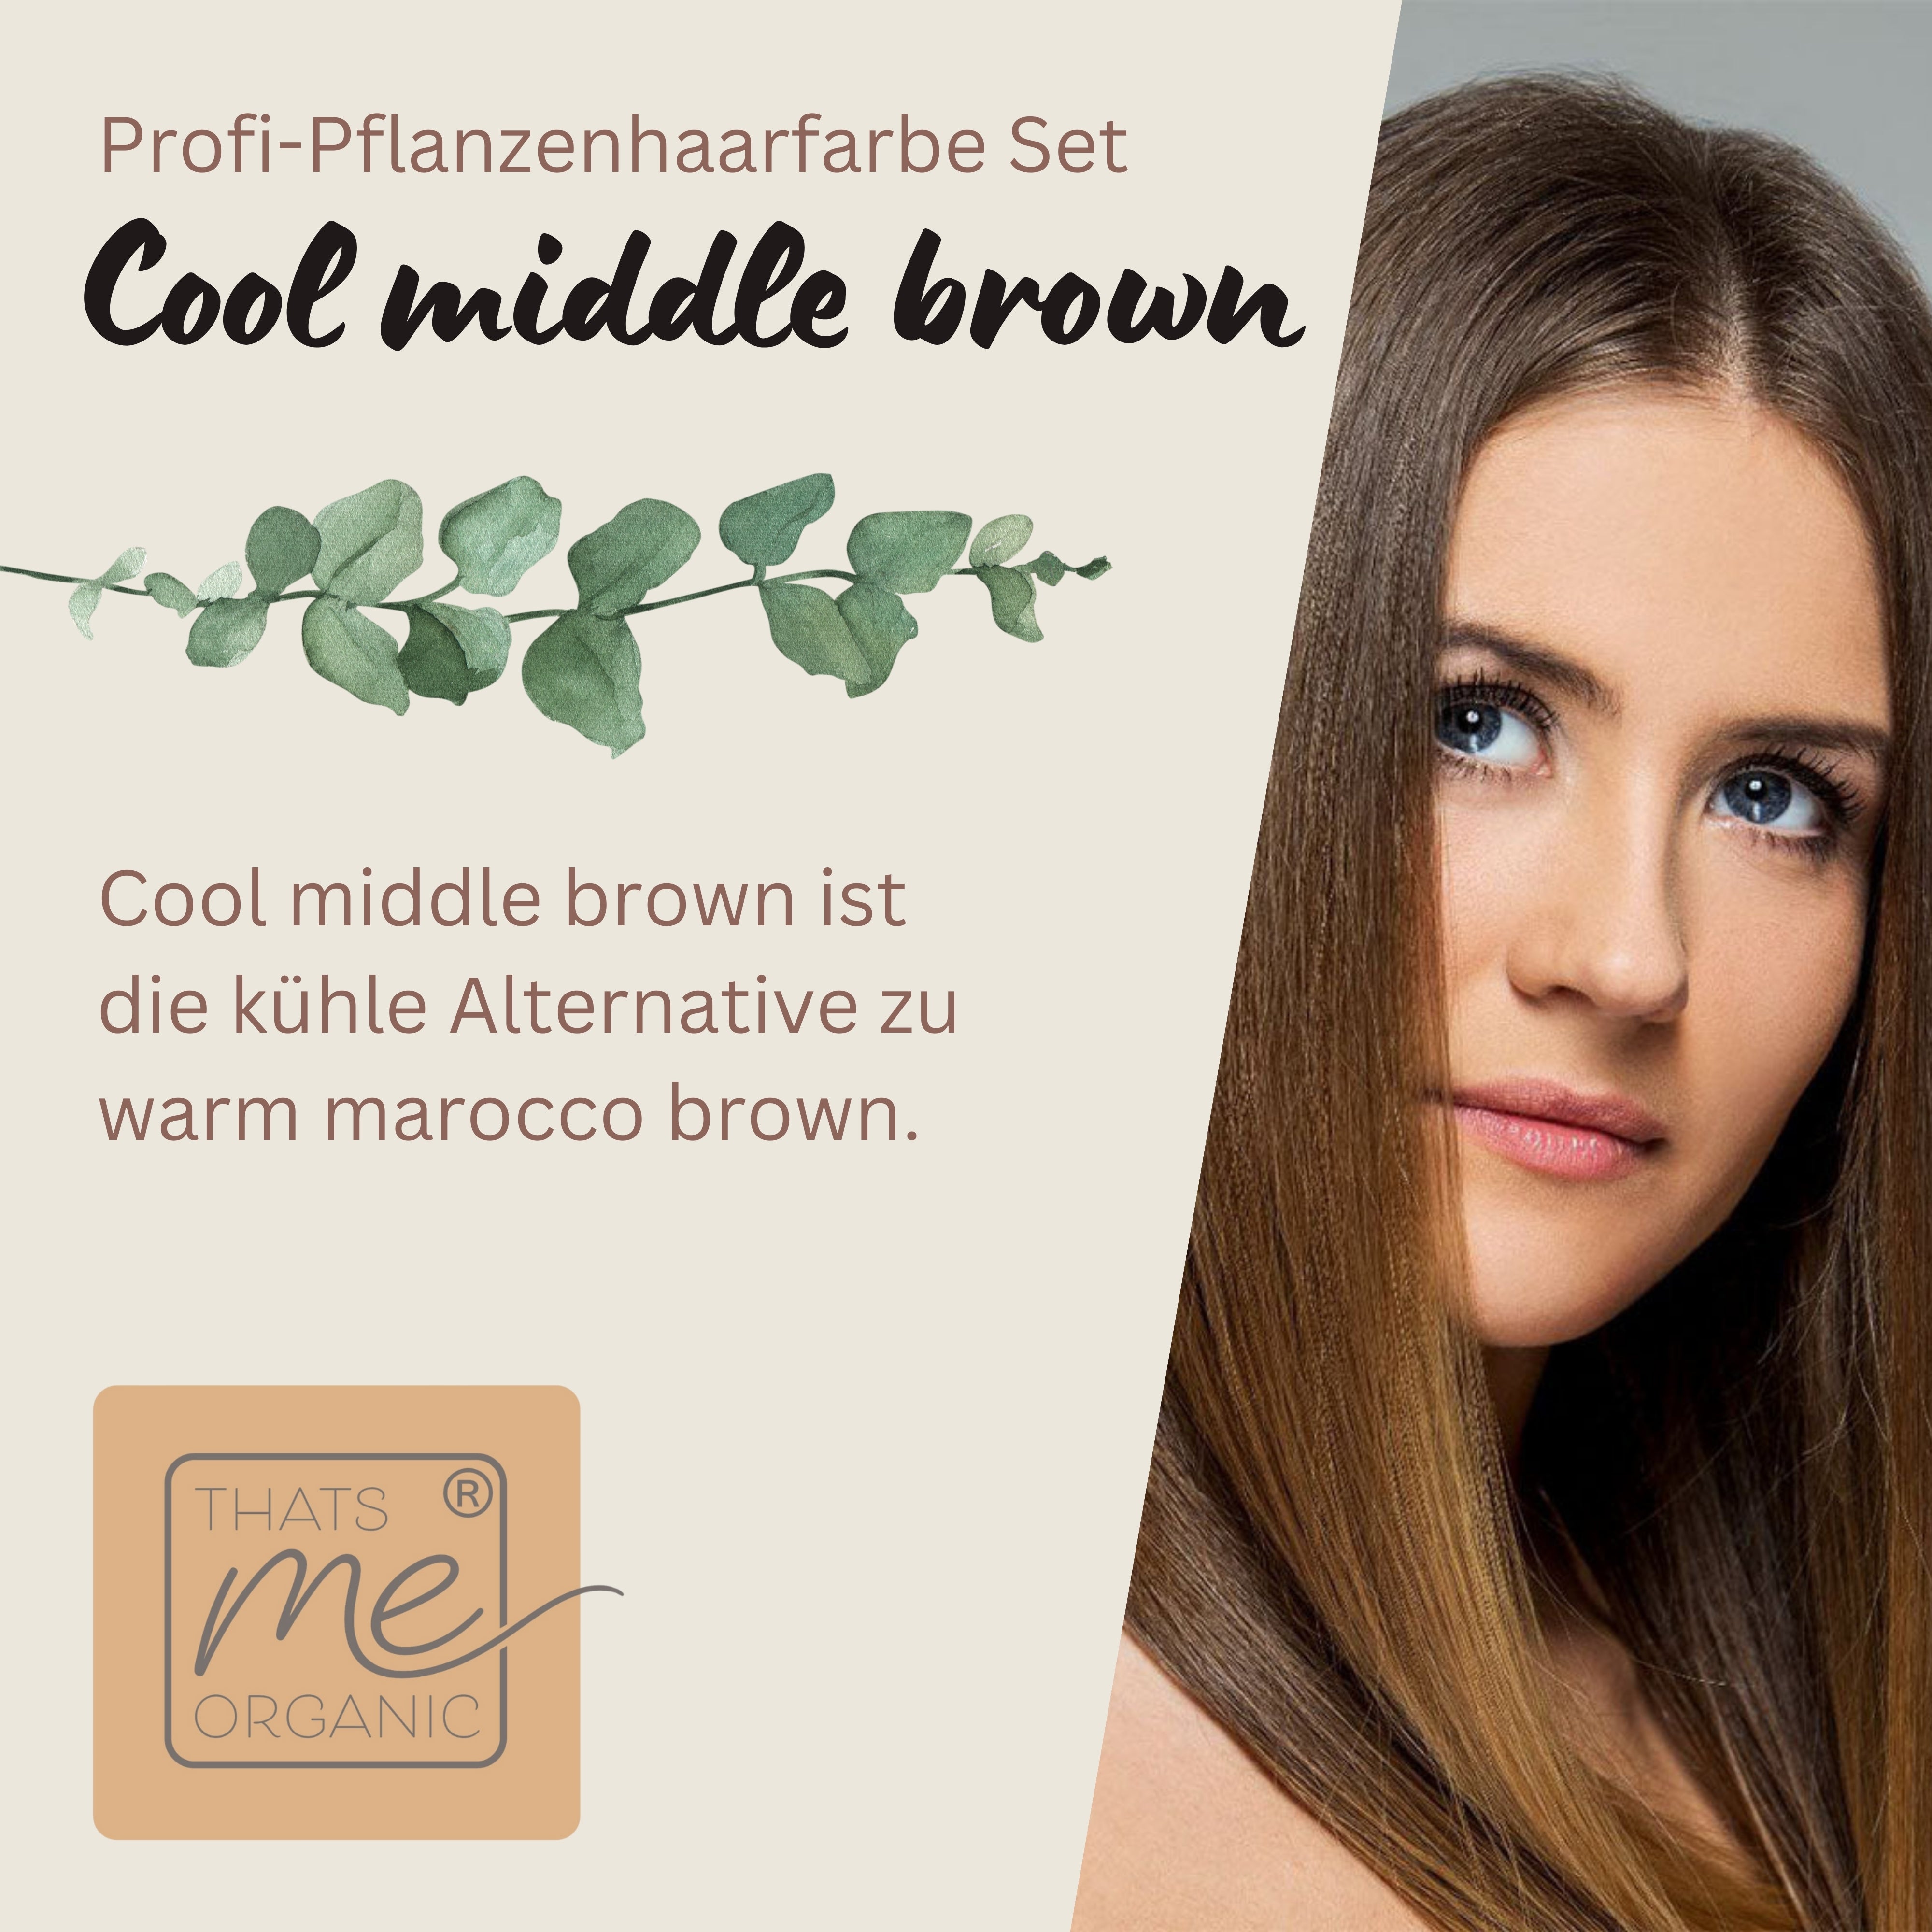 Profi-Pflanzenhaarfarbe SET "kühles mittleres braun - cool middle brown"